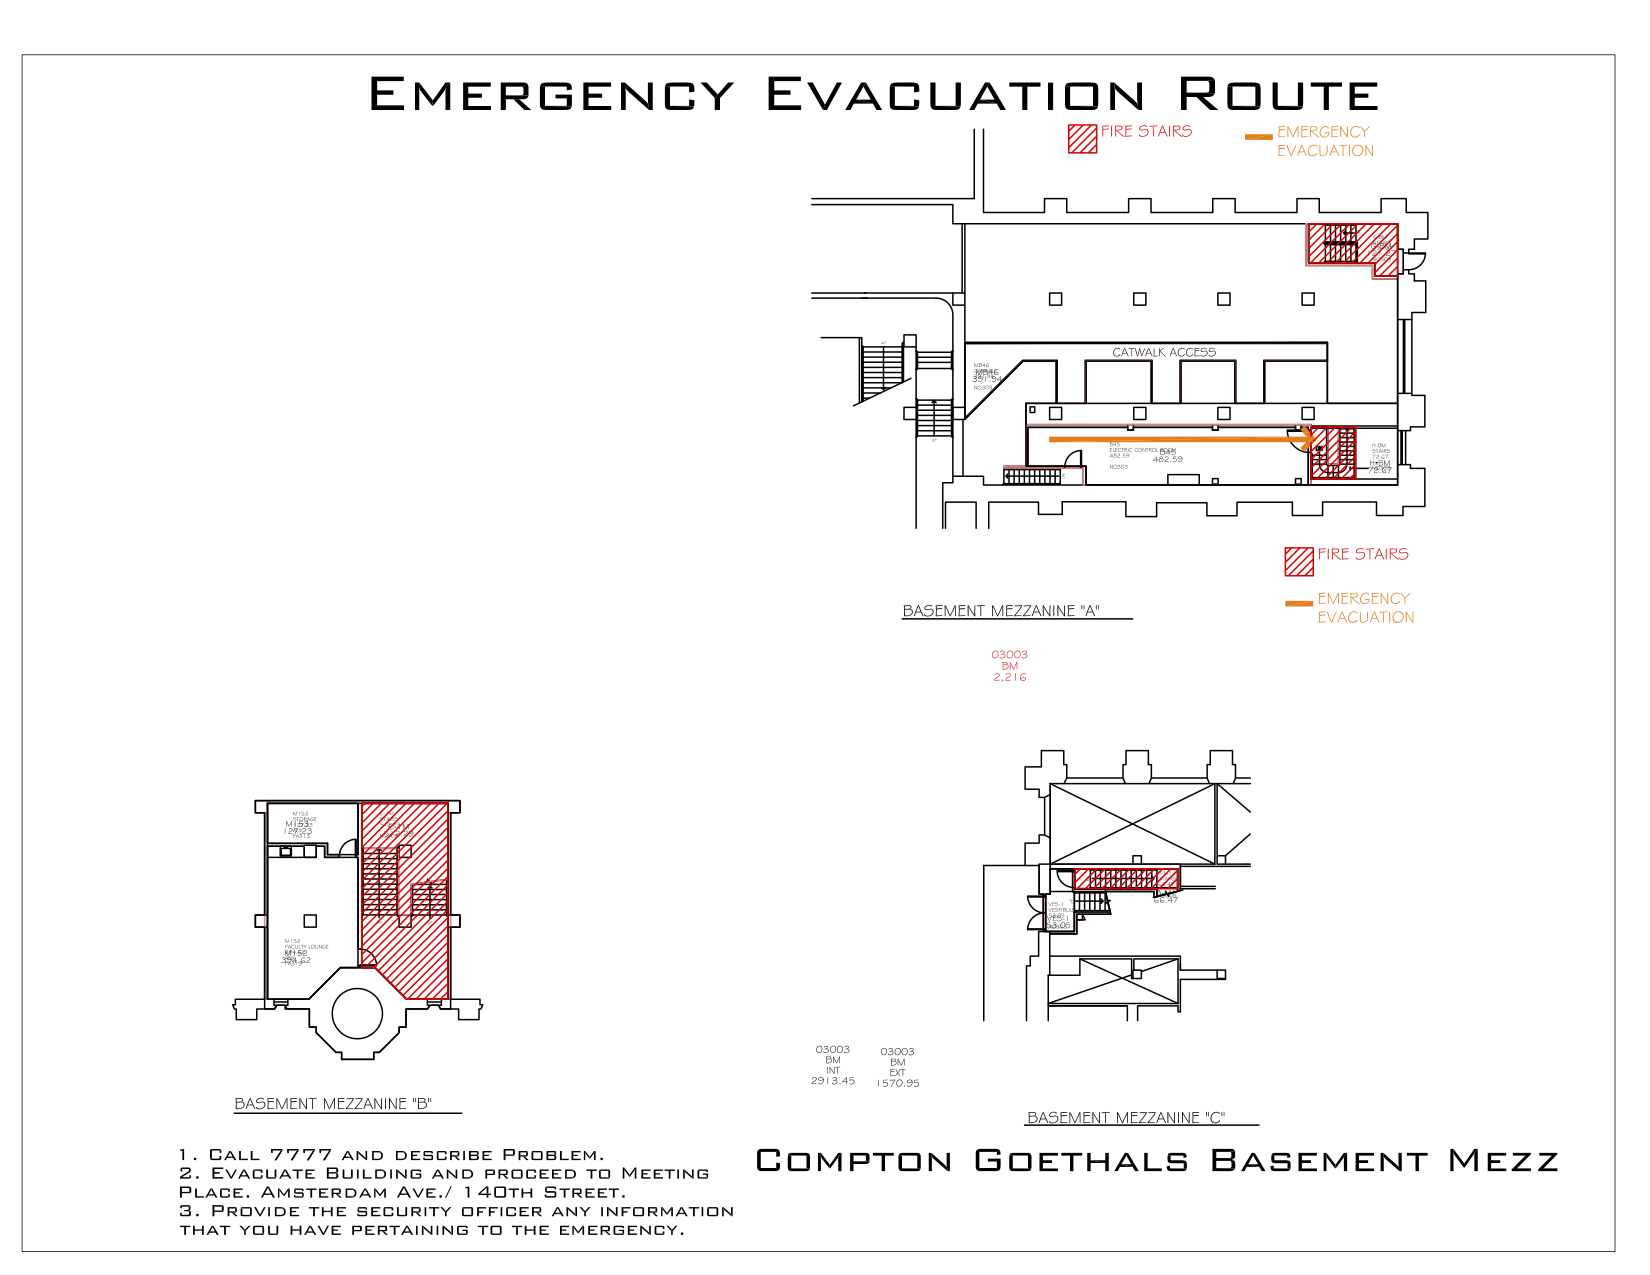 Compton Goethals Hall - Evacuation Routes 3